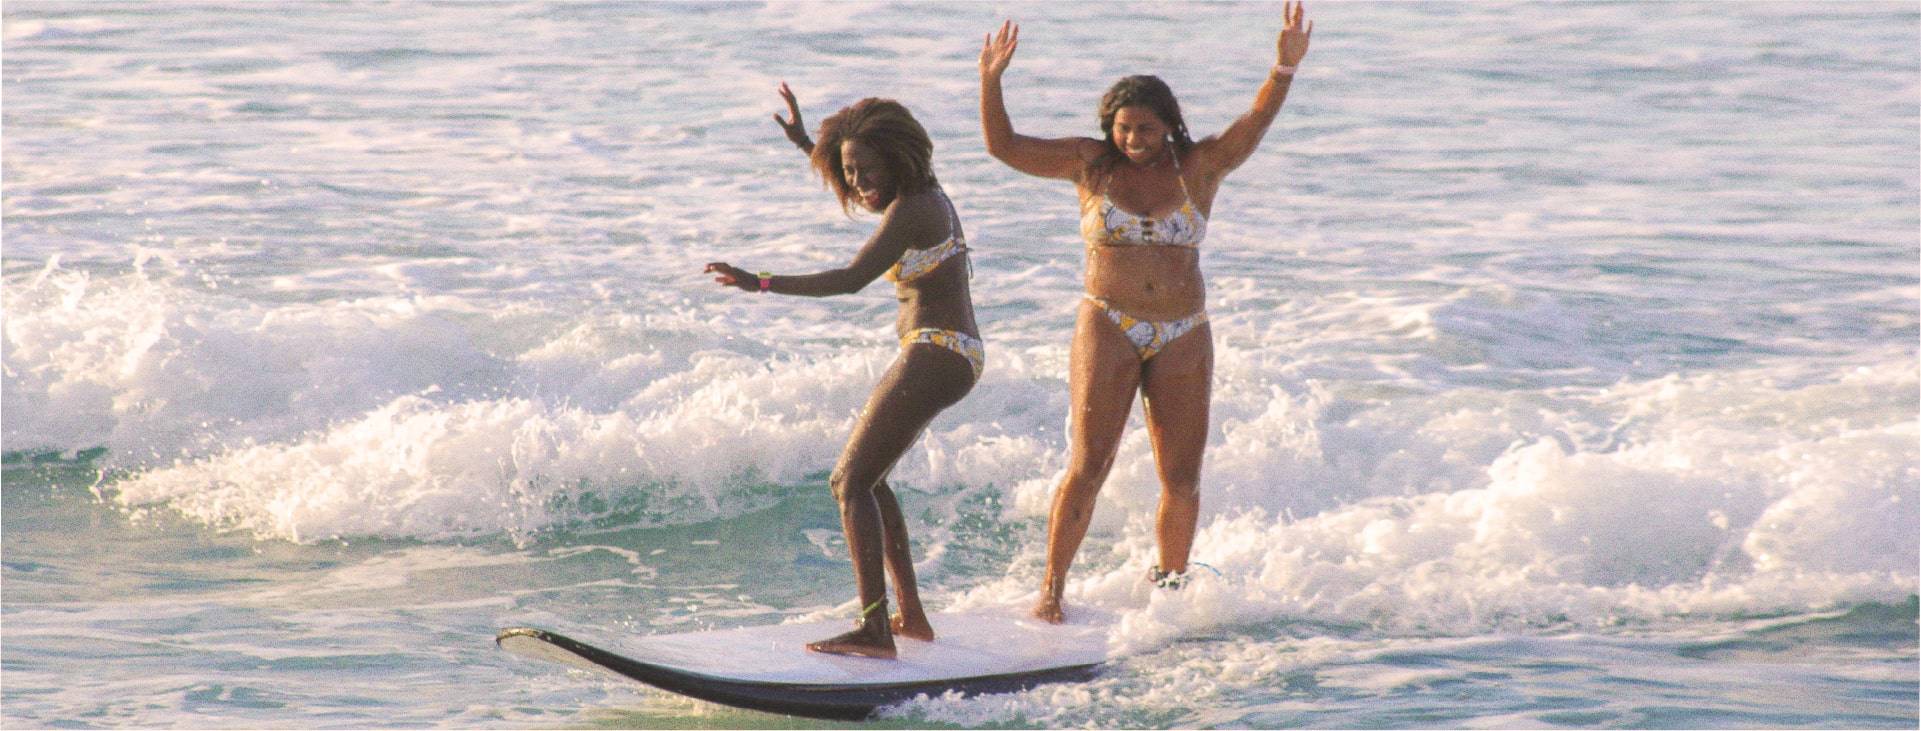 Chrissana Wilmot & Tiara B. Jones surfing together at Tortola beach